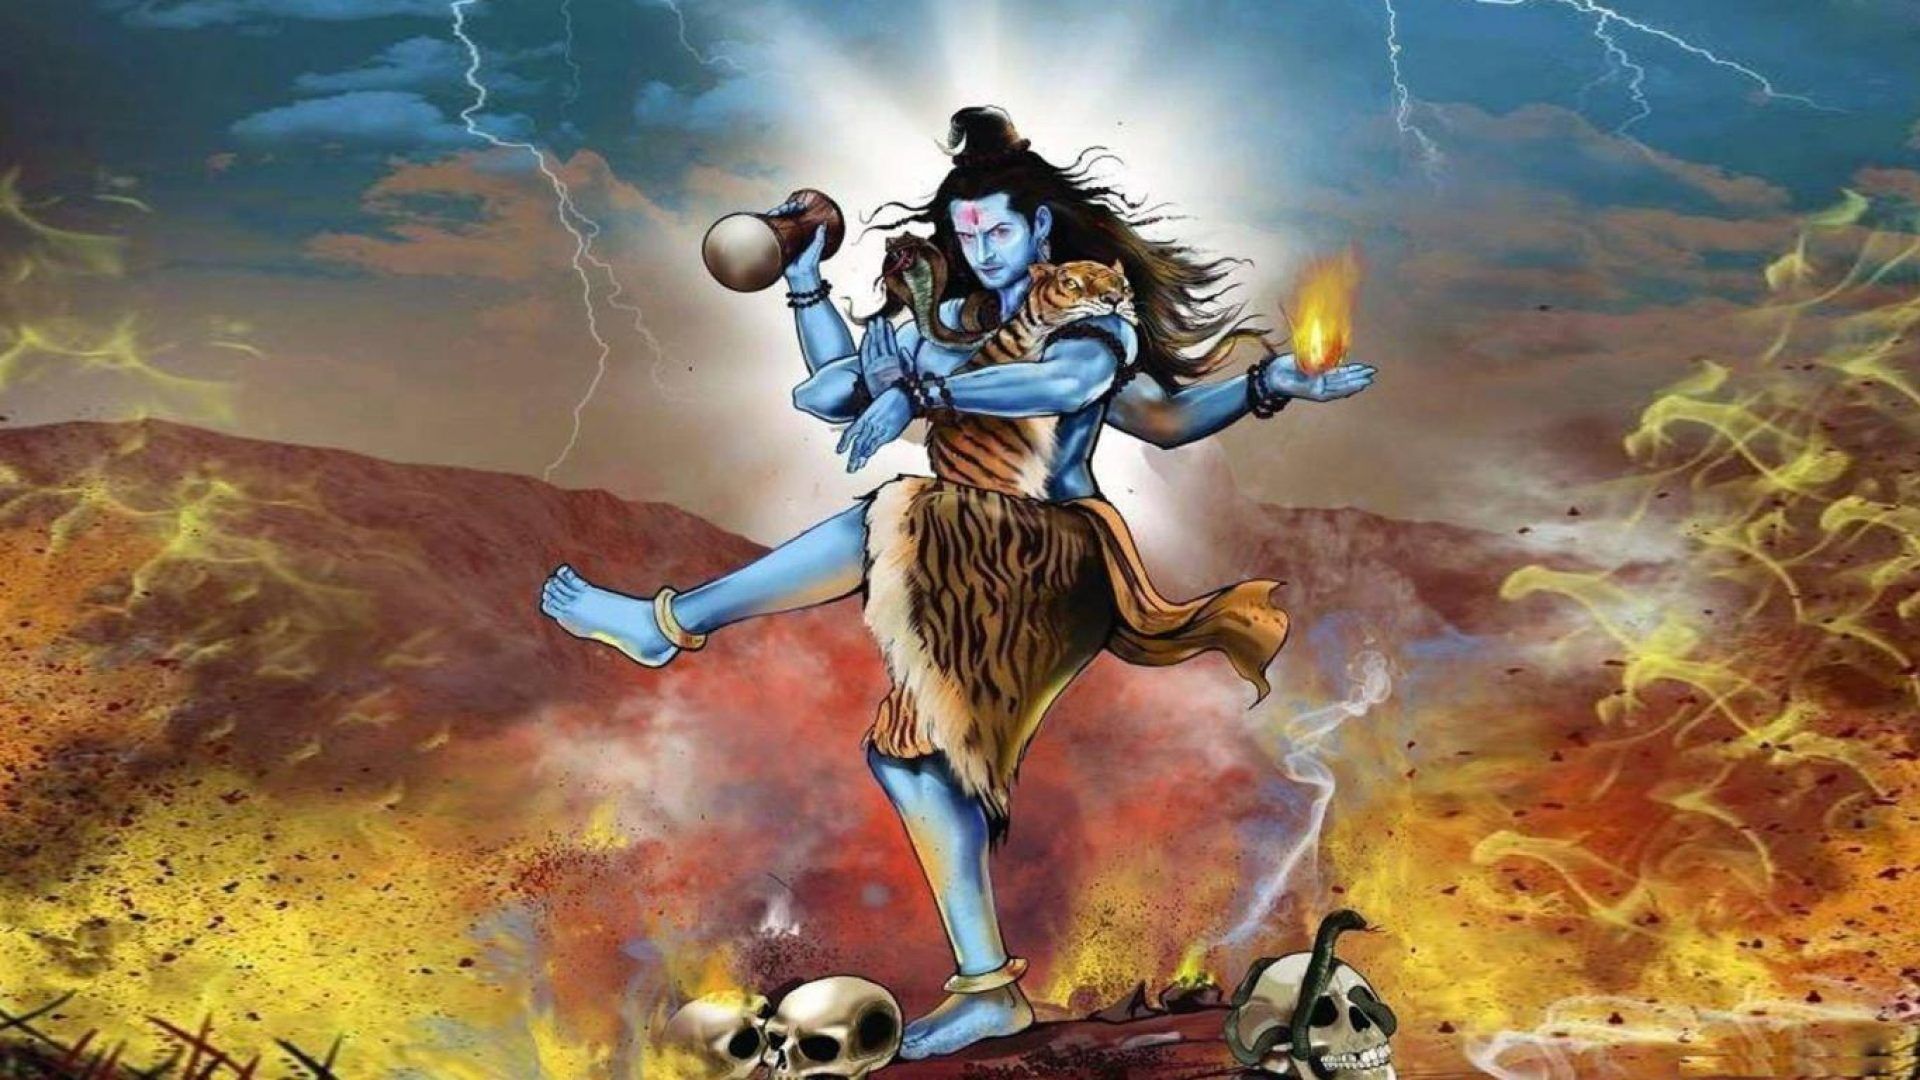 Lord Shiva Angry Image. Hindu Gods and Goddesses